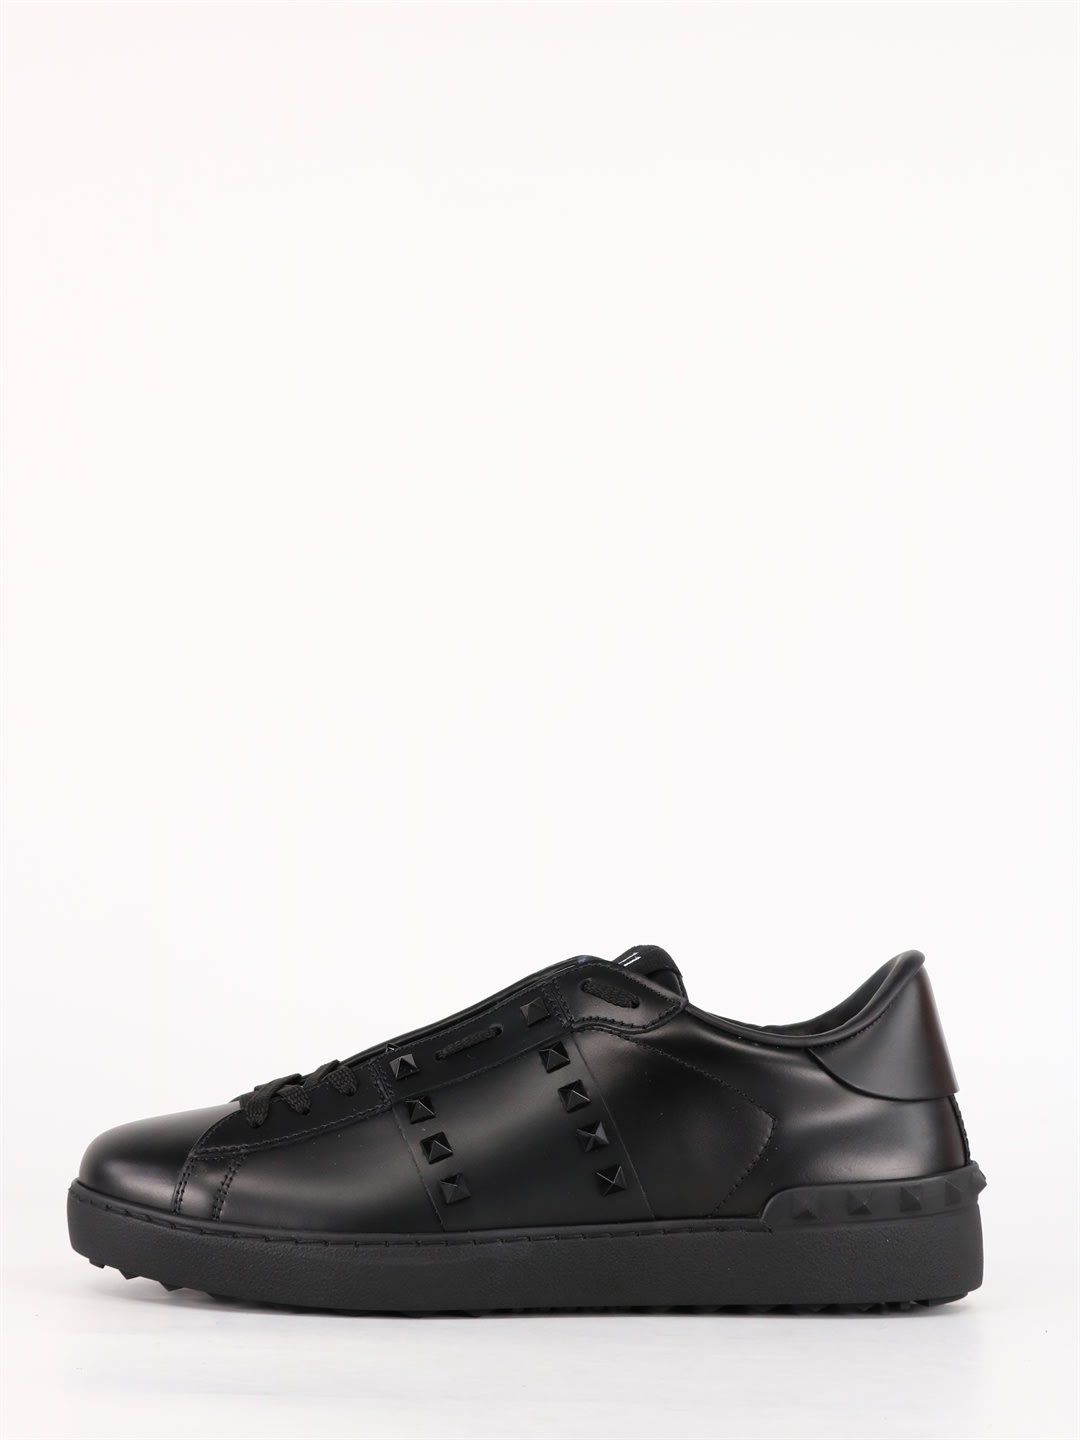 Valentino Garavani Rockstud Untitled Sneaker Black